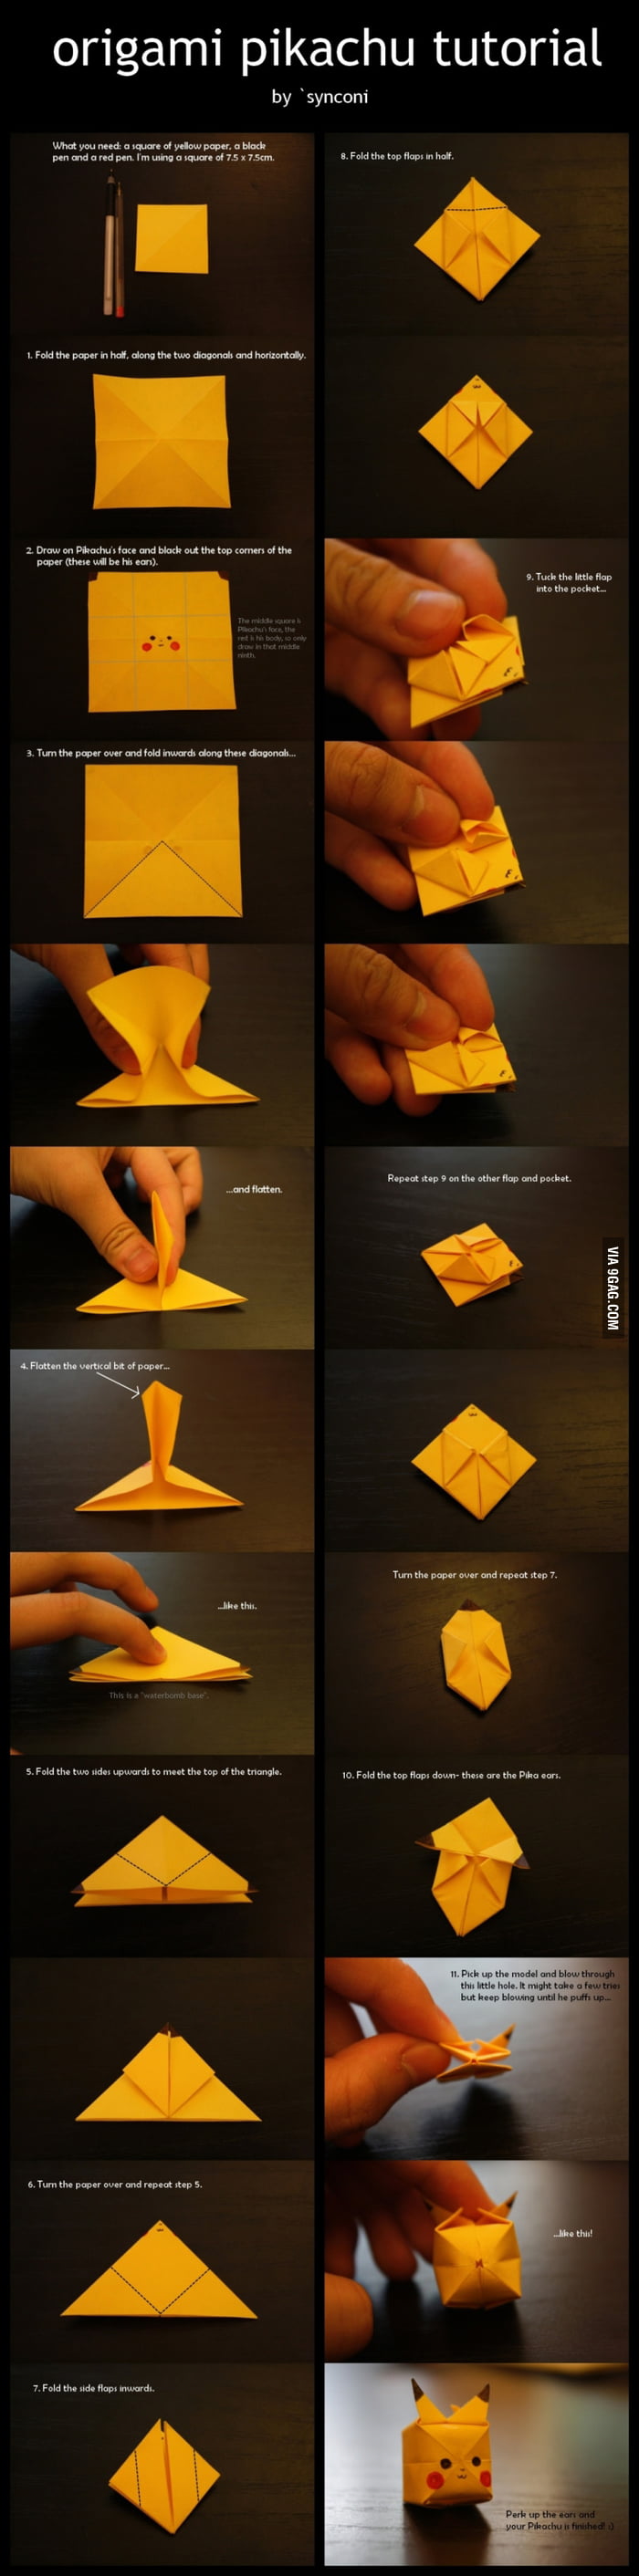 Origami Pikachu 9GAG